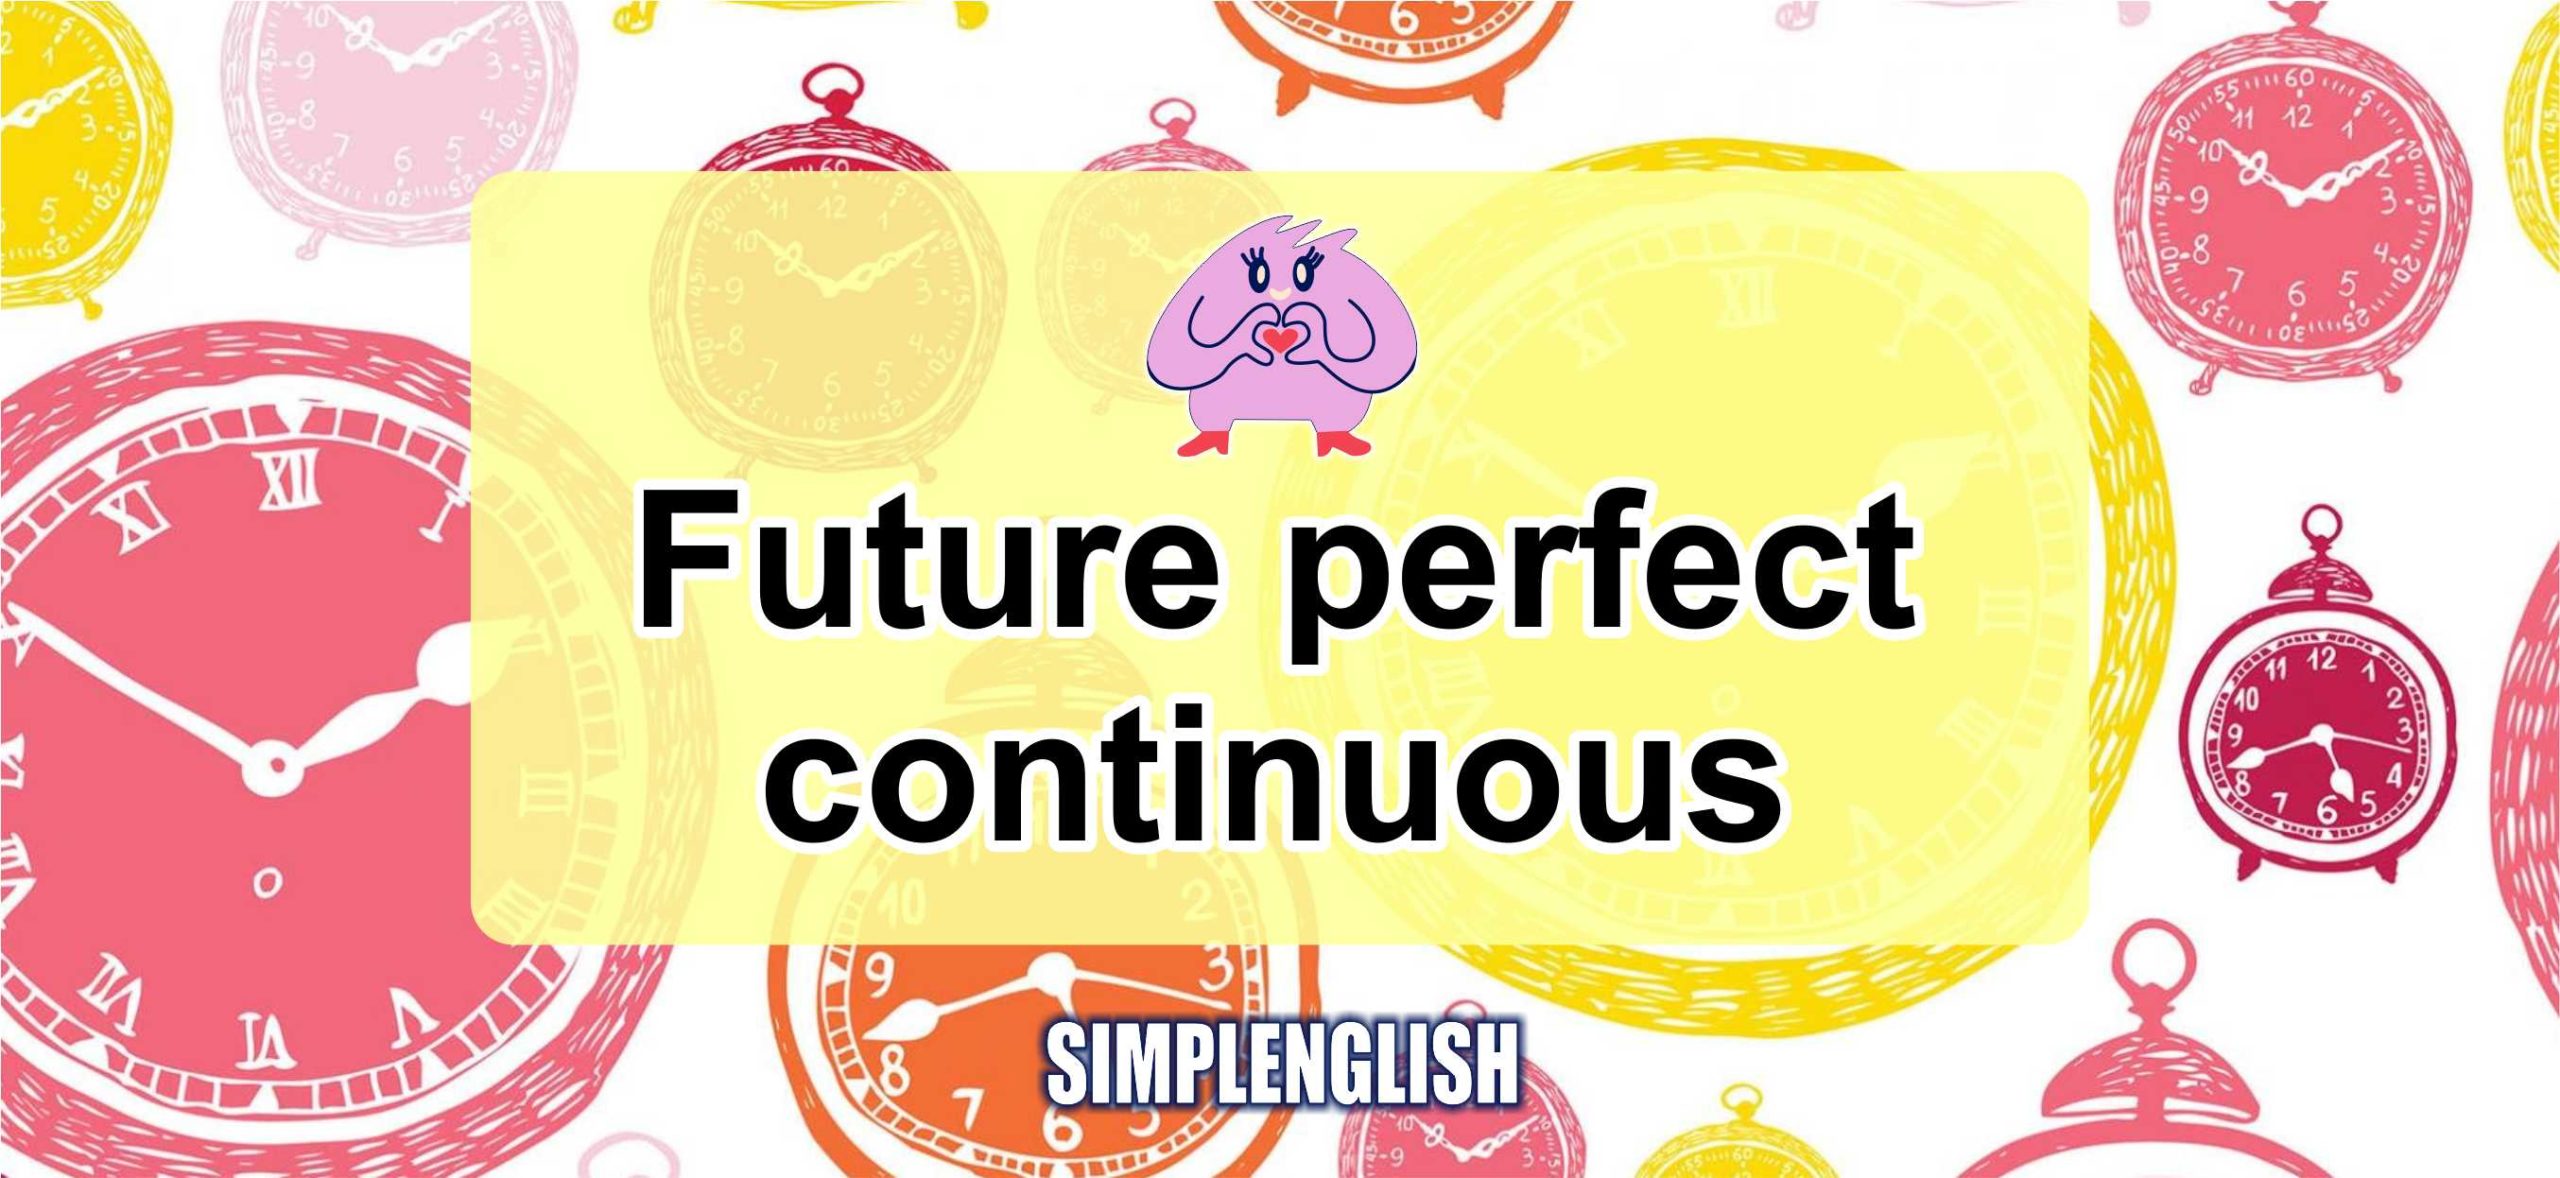 Future Perfect Continuous